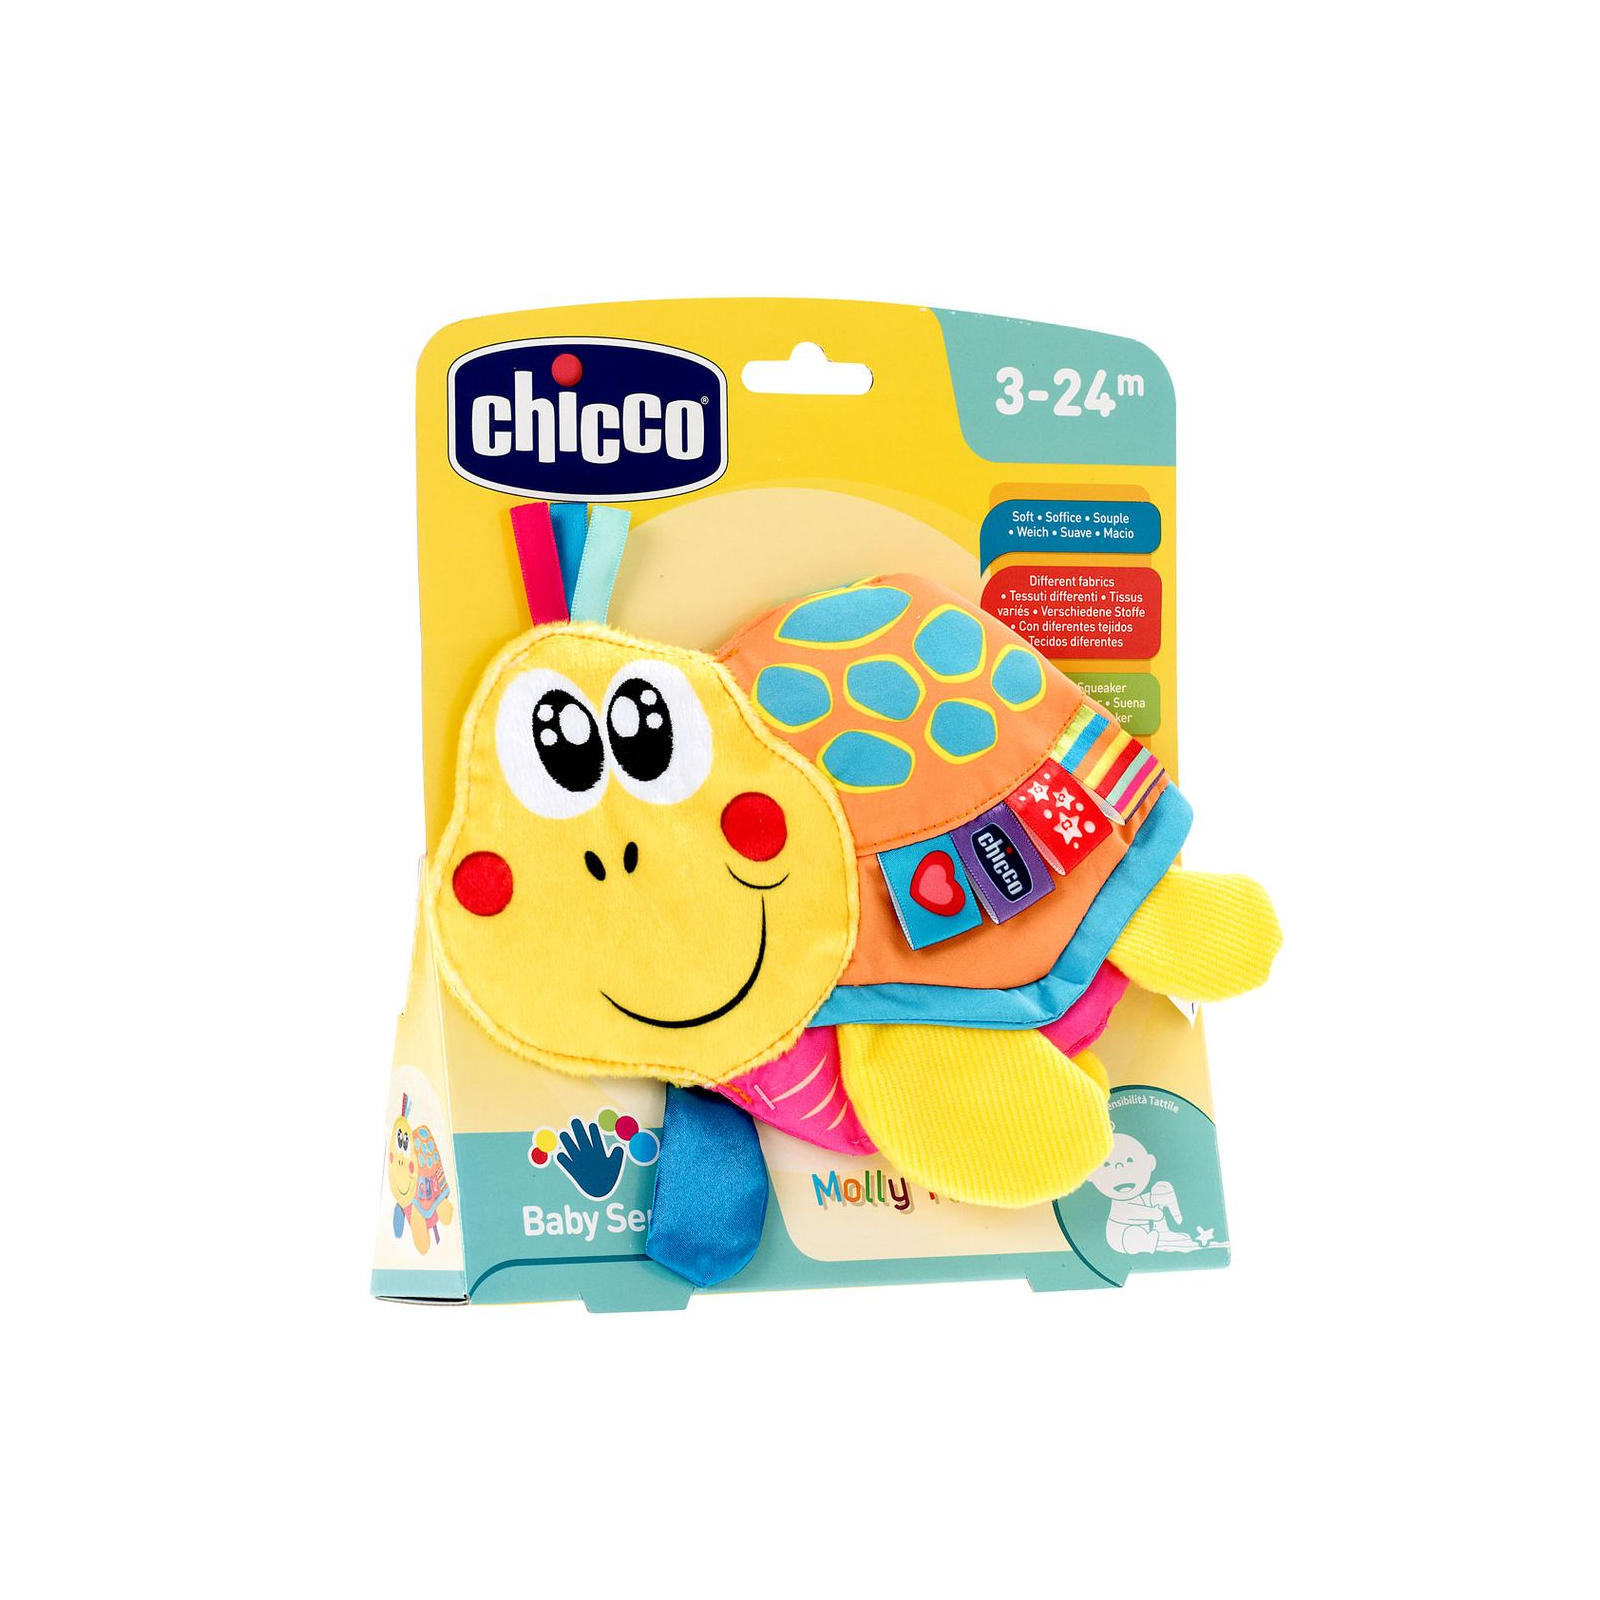 Развивающая игрушка Chicco Черепаха Молли (07895.00) изображение 2